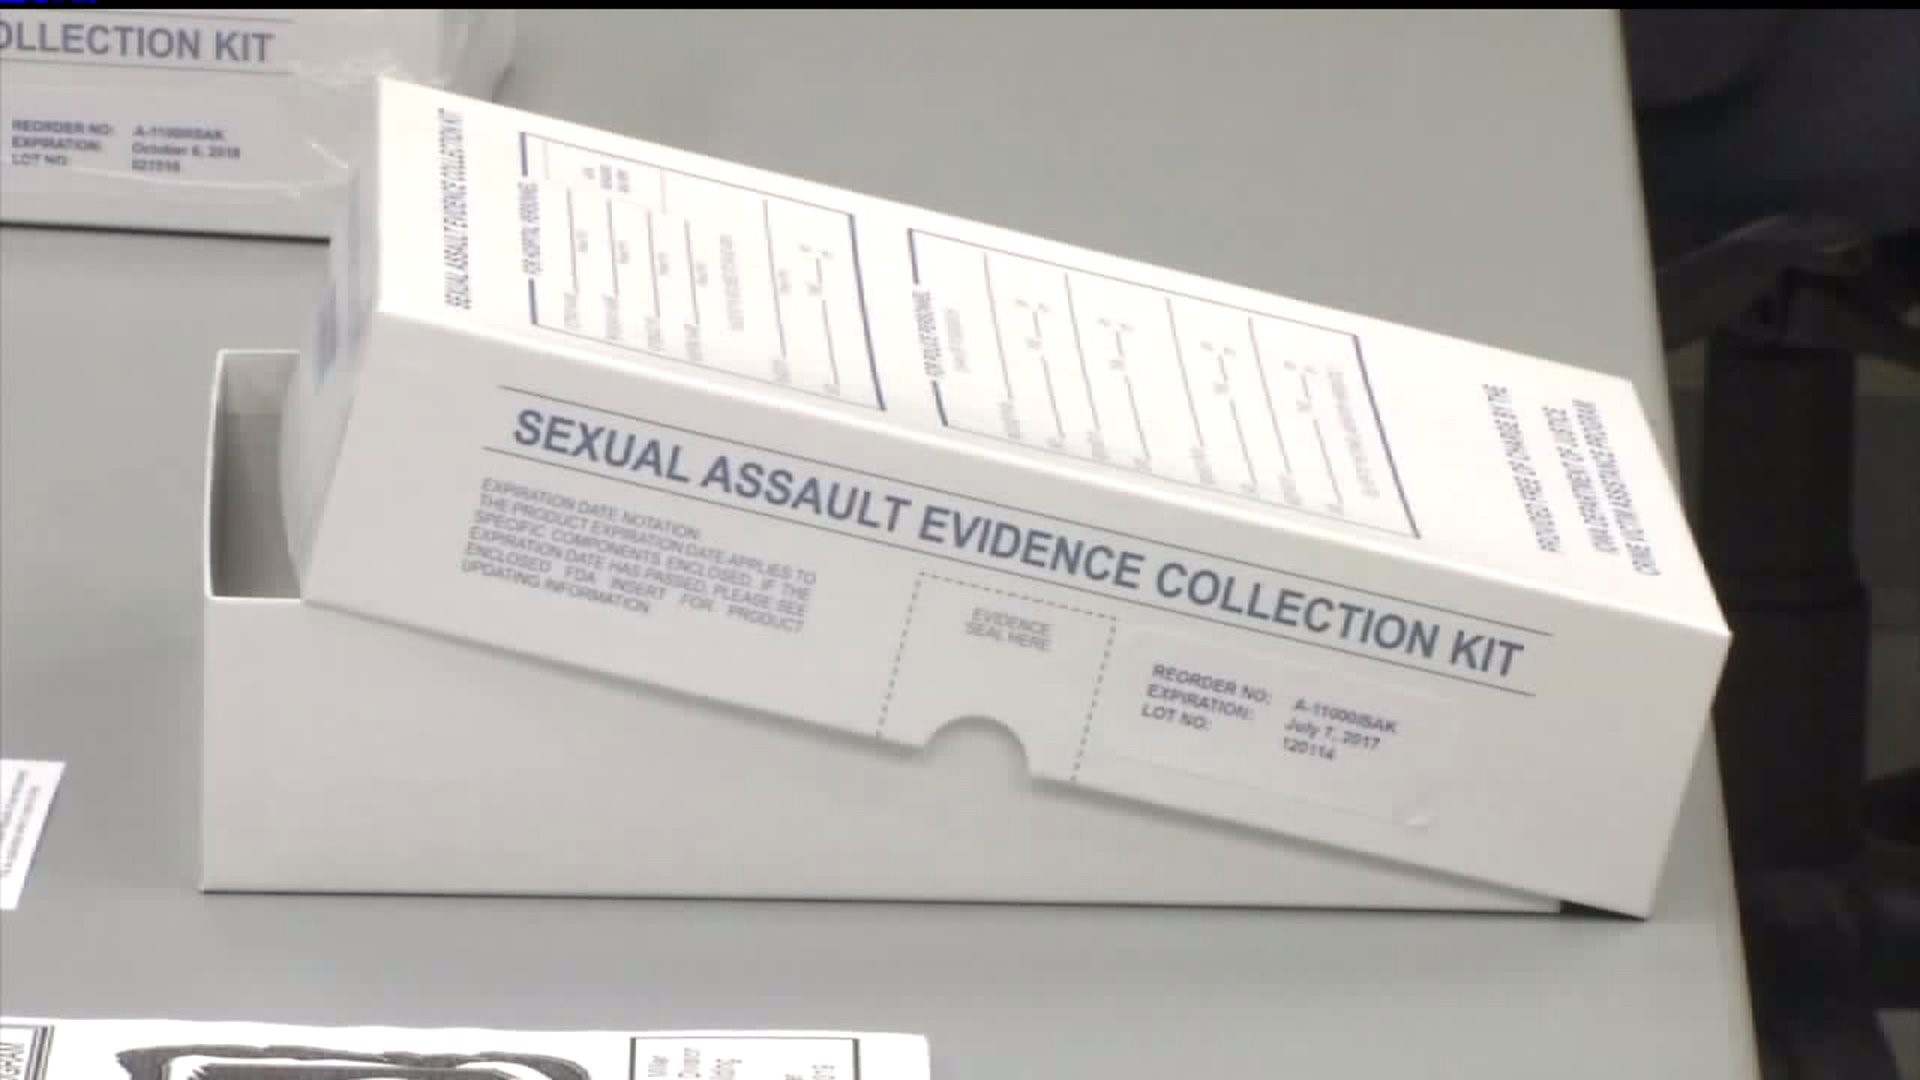 Iowa to use New Rape Kits